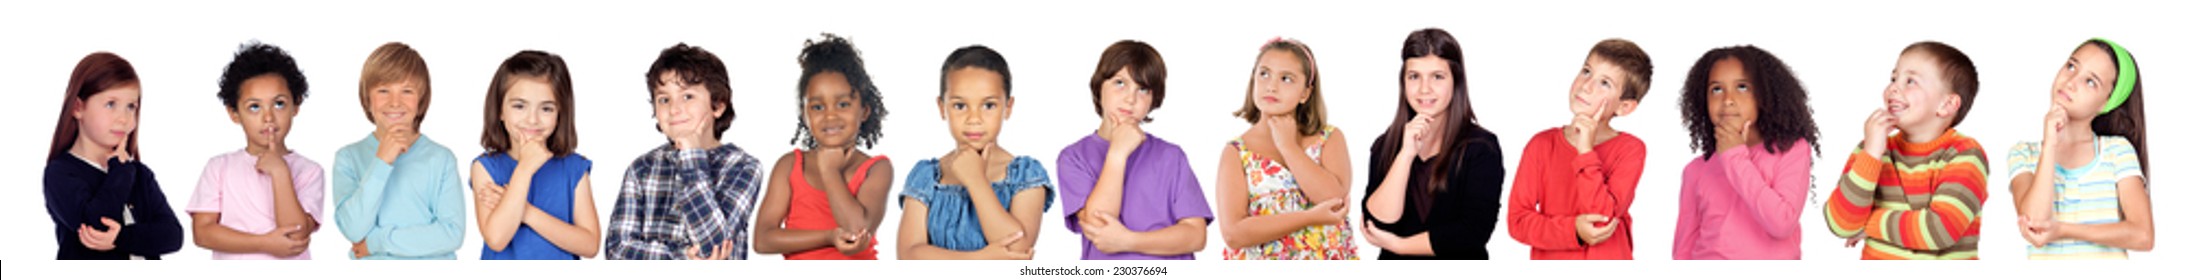 Many children thinking isolate on a white background